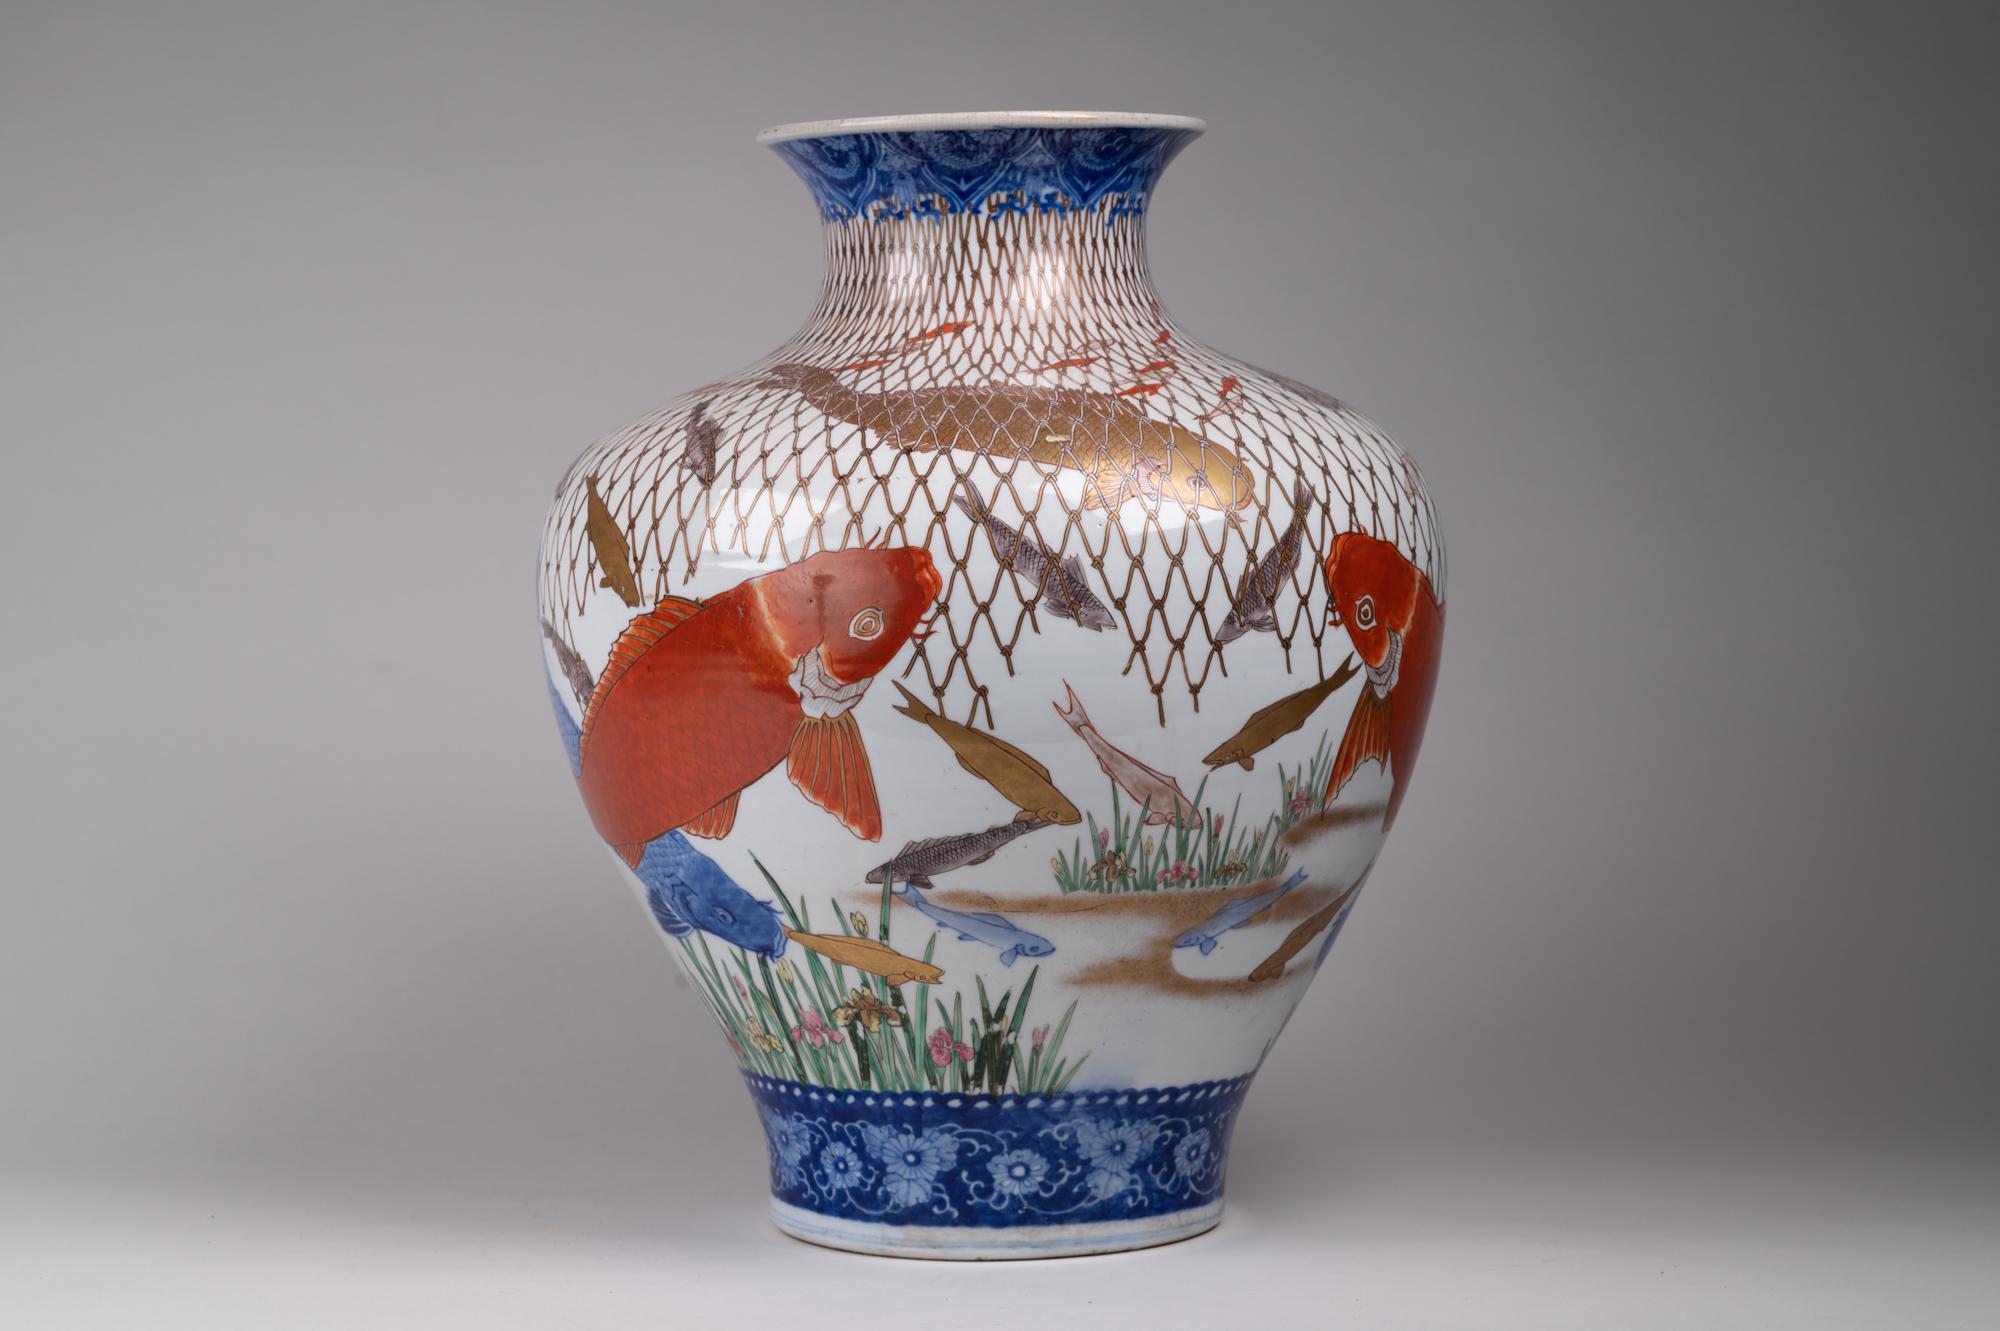 Japanese 19th Century Large and Spectacular Multicolored Imari Vase